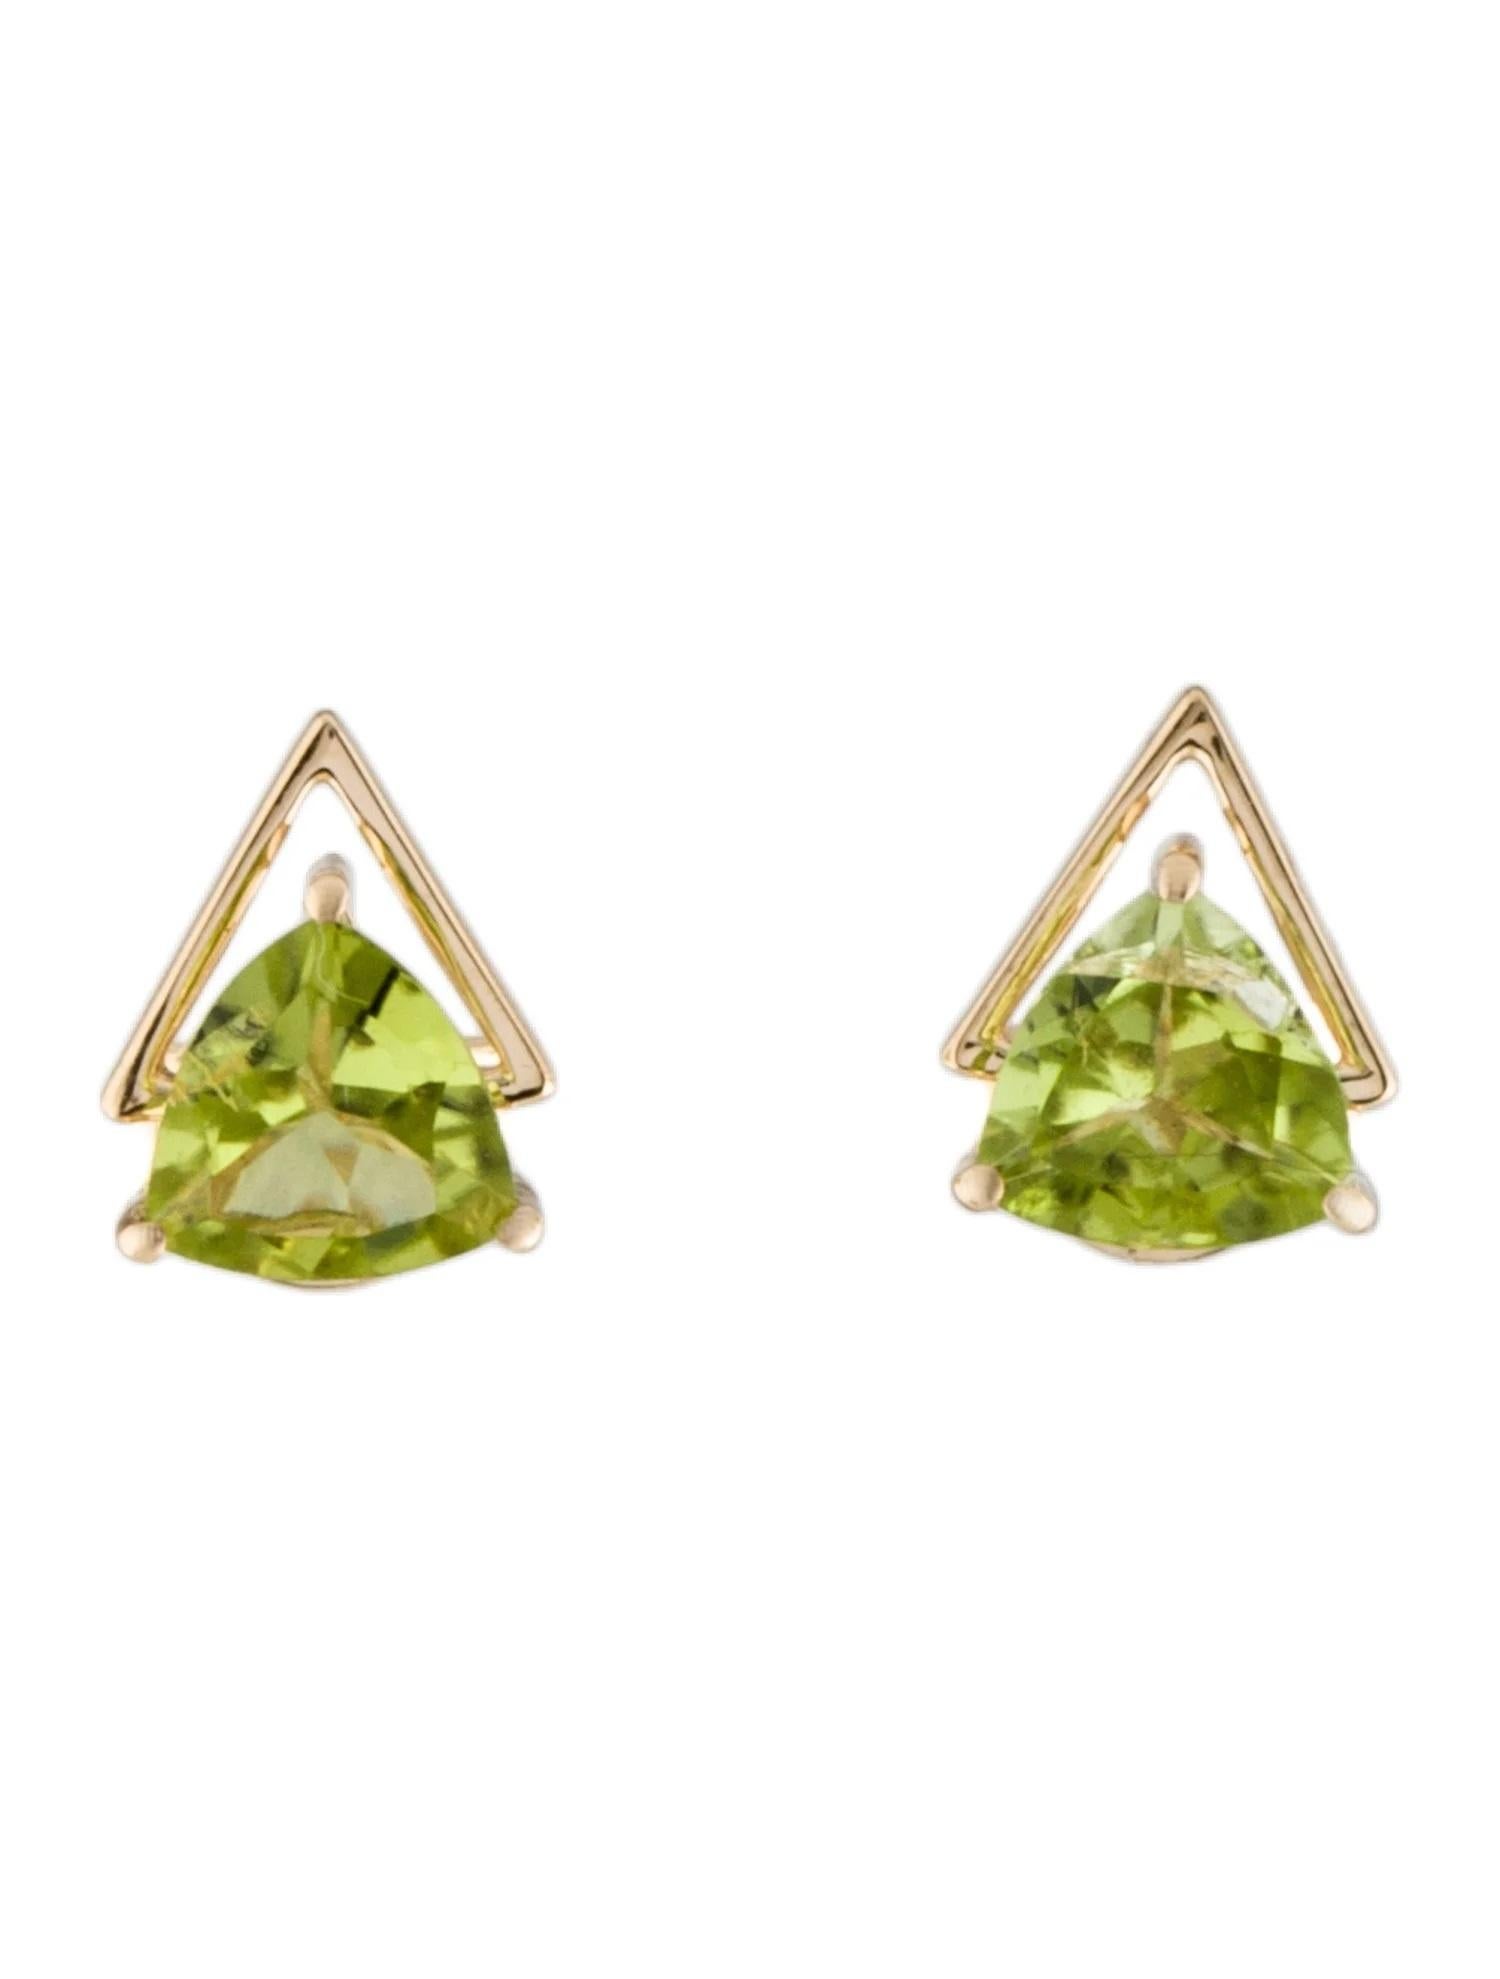 Brilliant Cut 14K Peridot Stud Earrings - Vibrant Green Gemstones, Modern Design For Sale